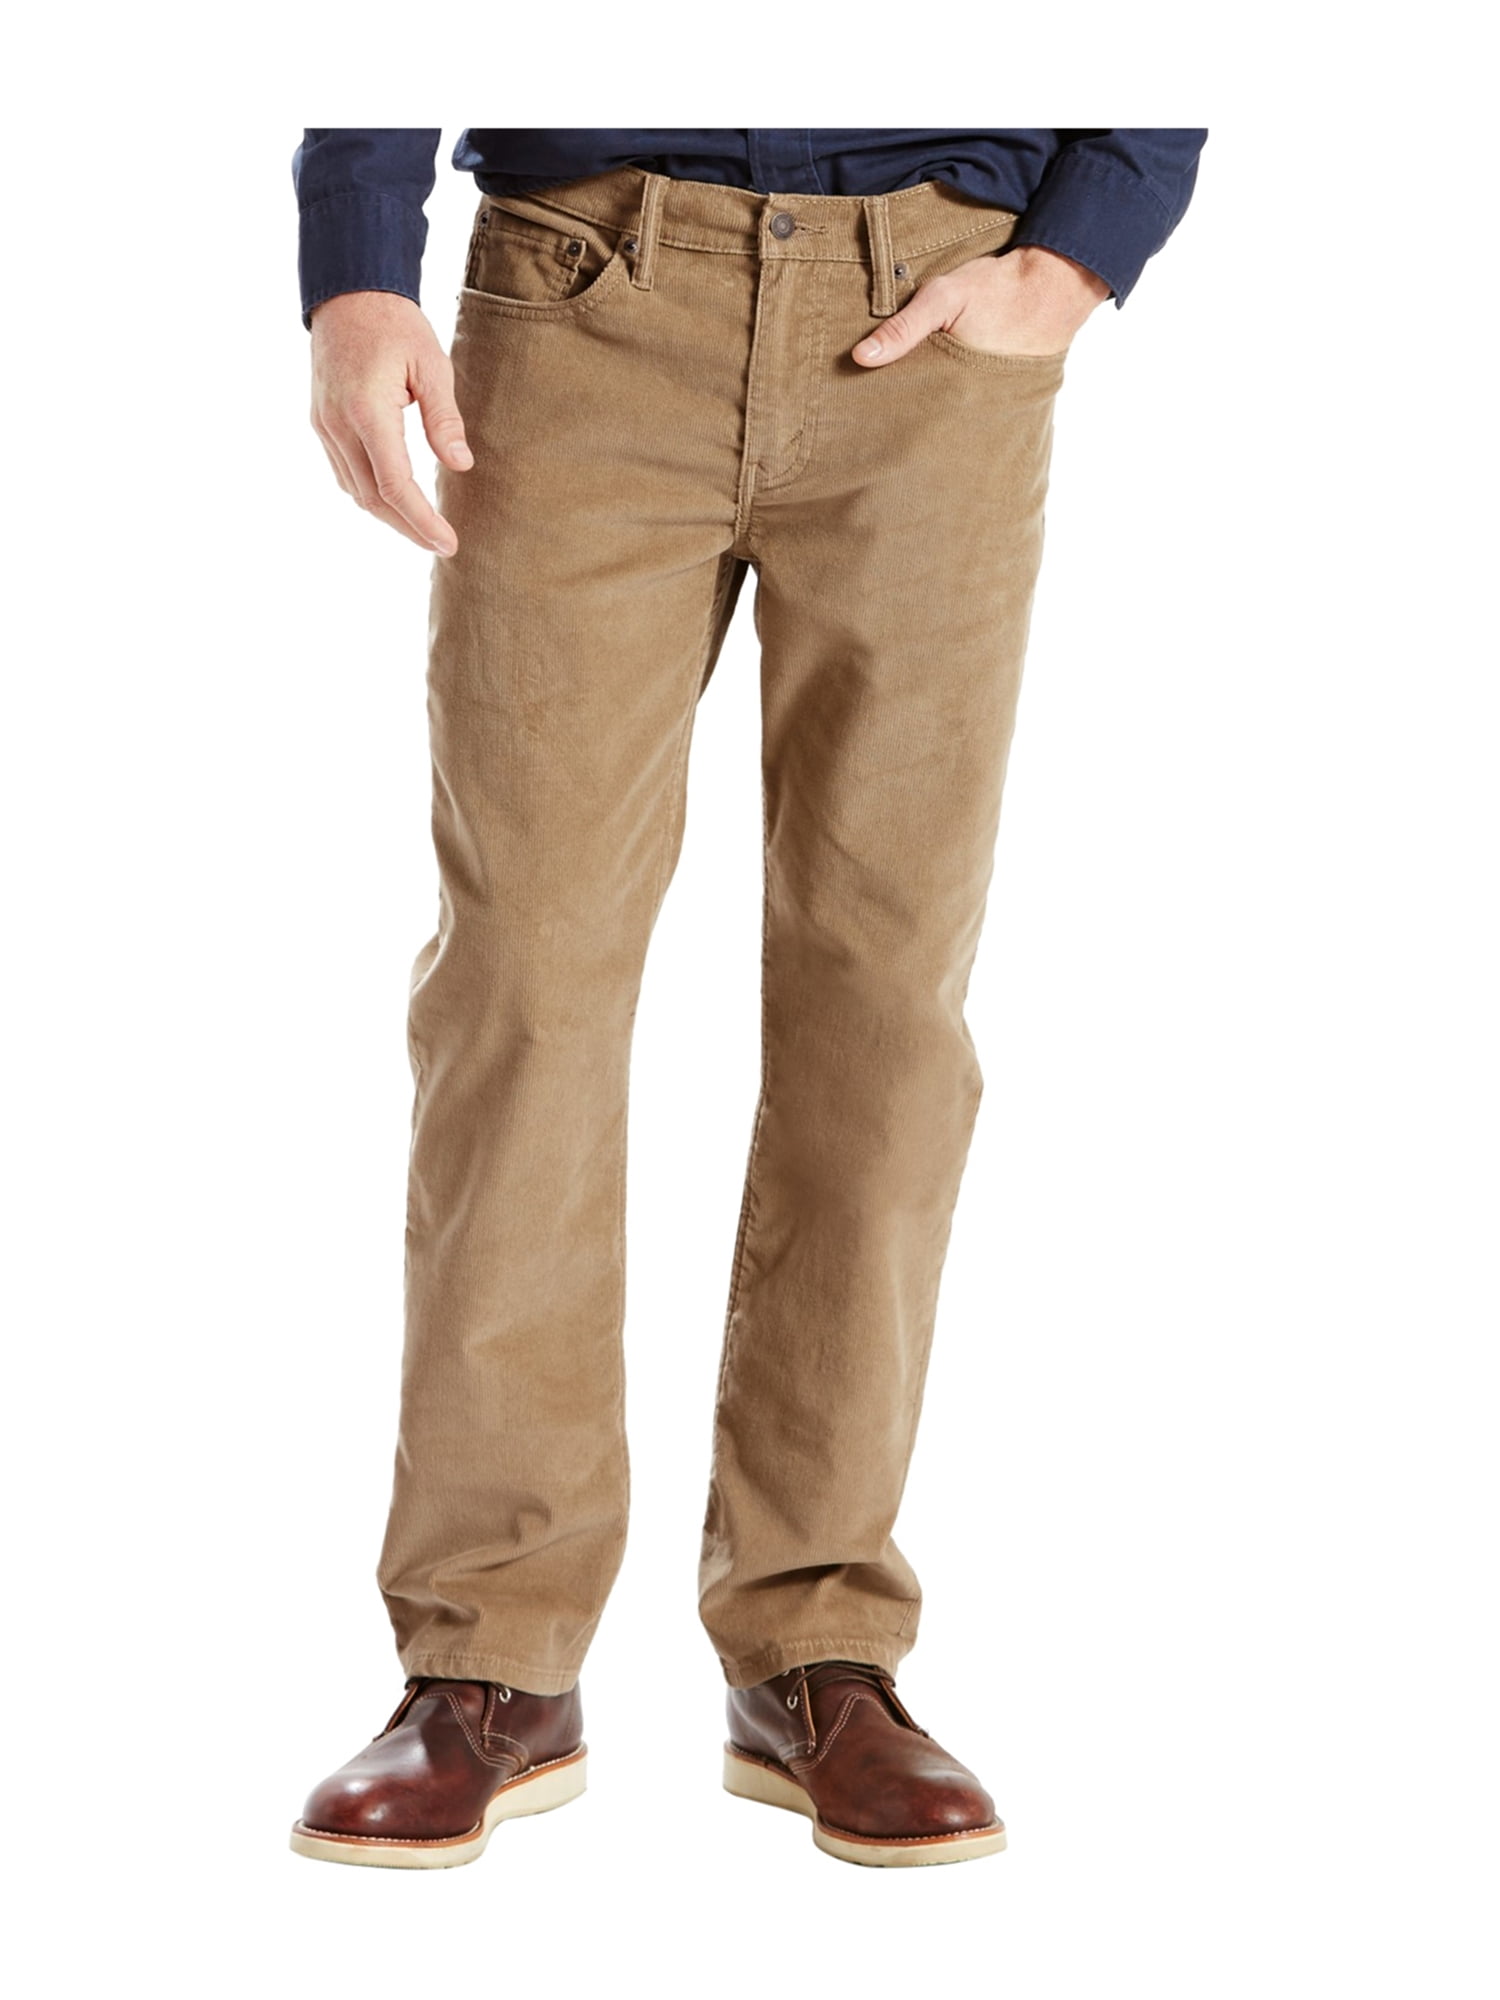 Levi's Mens Bedford Corduroy Slim Fit Jeans brown 30x32 | Walmart Canada